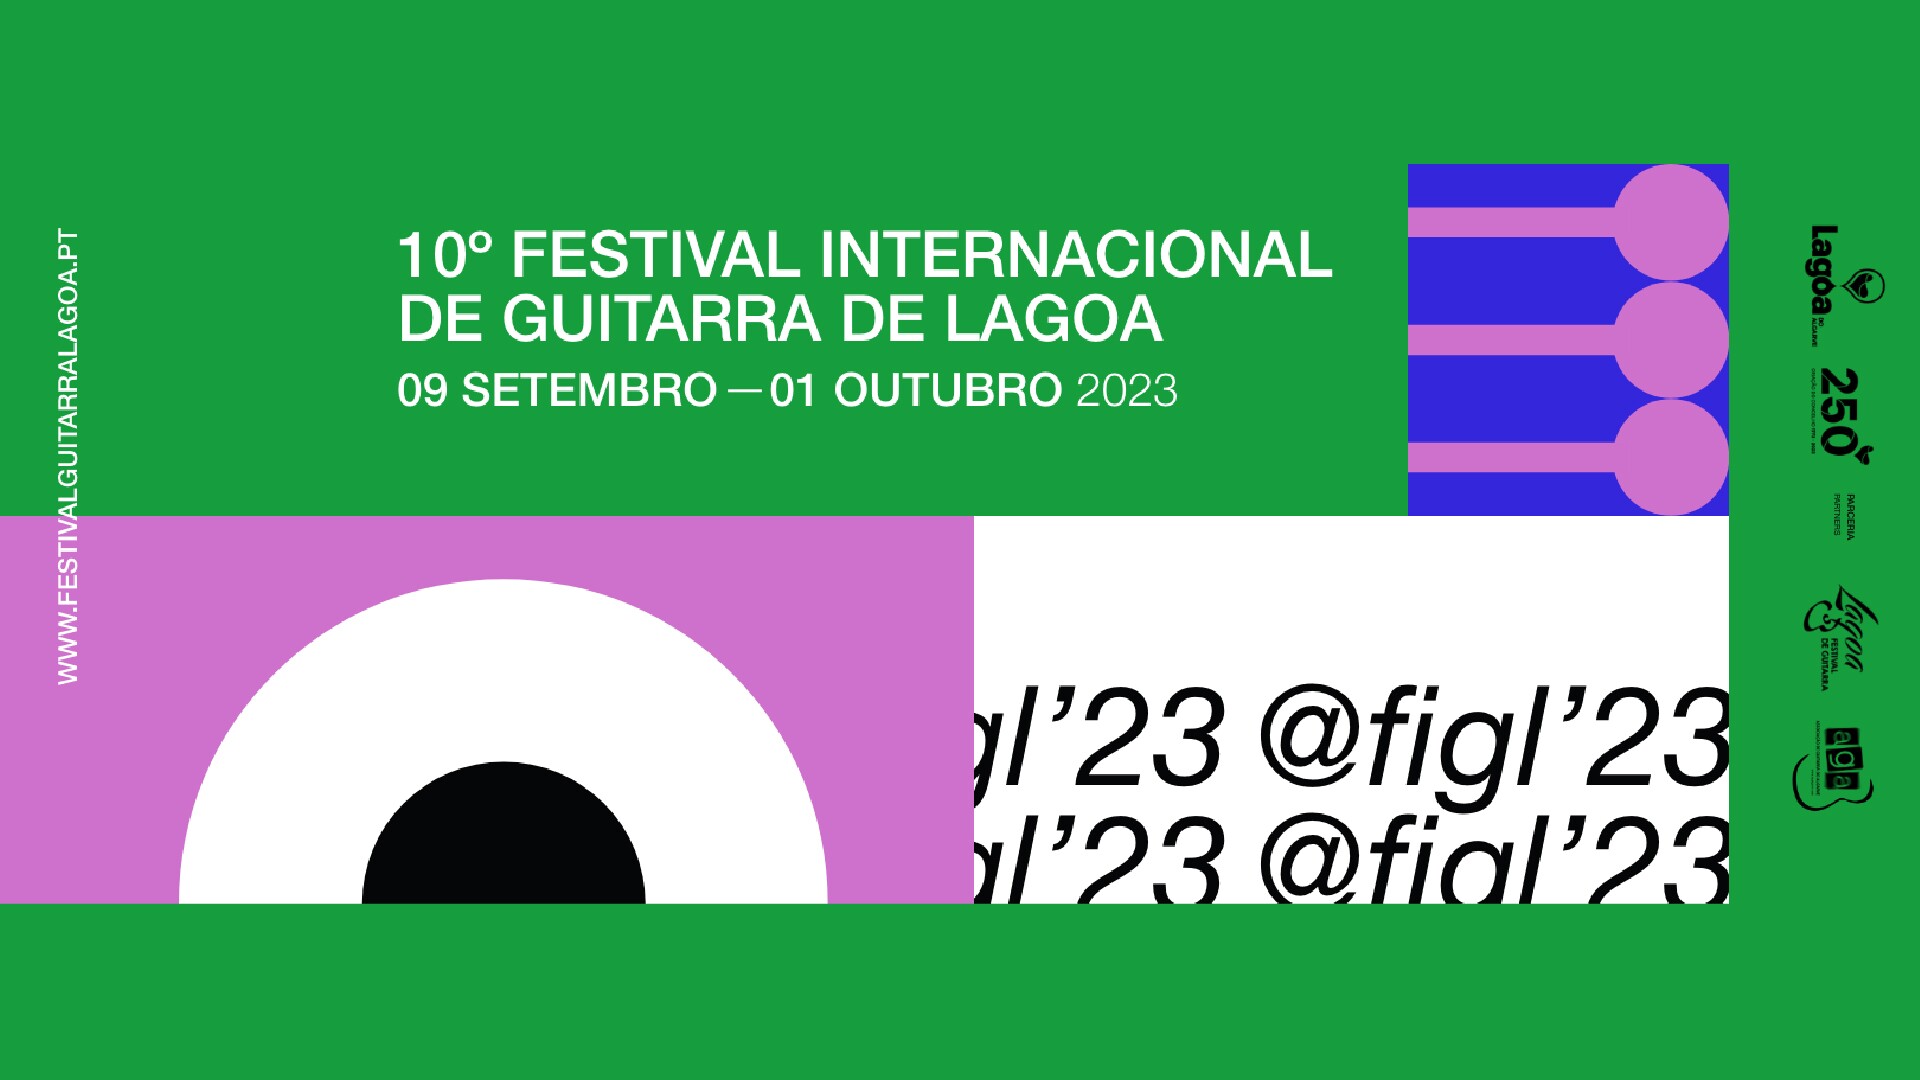 10º Festival Internacional de Guitarra de Lagoa